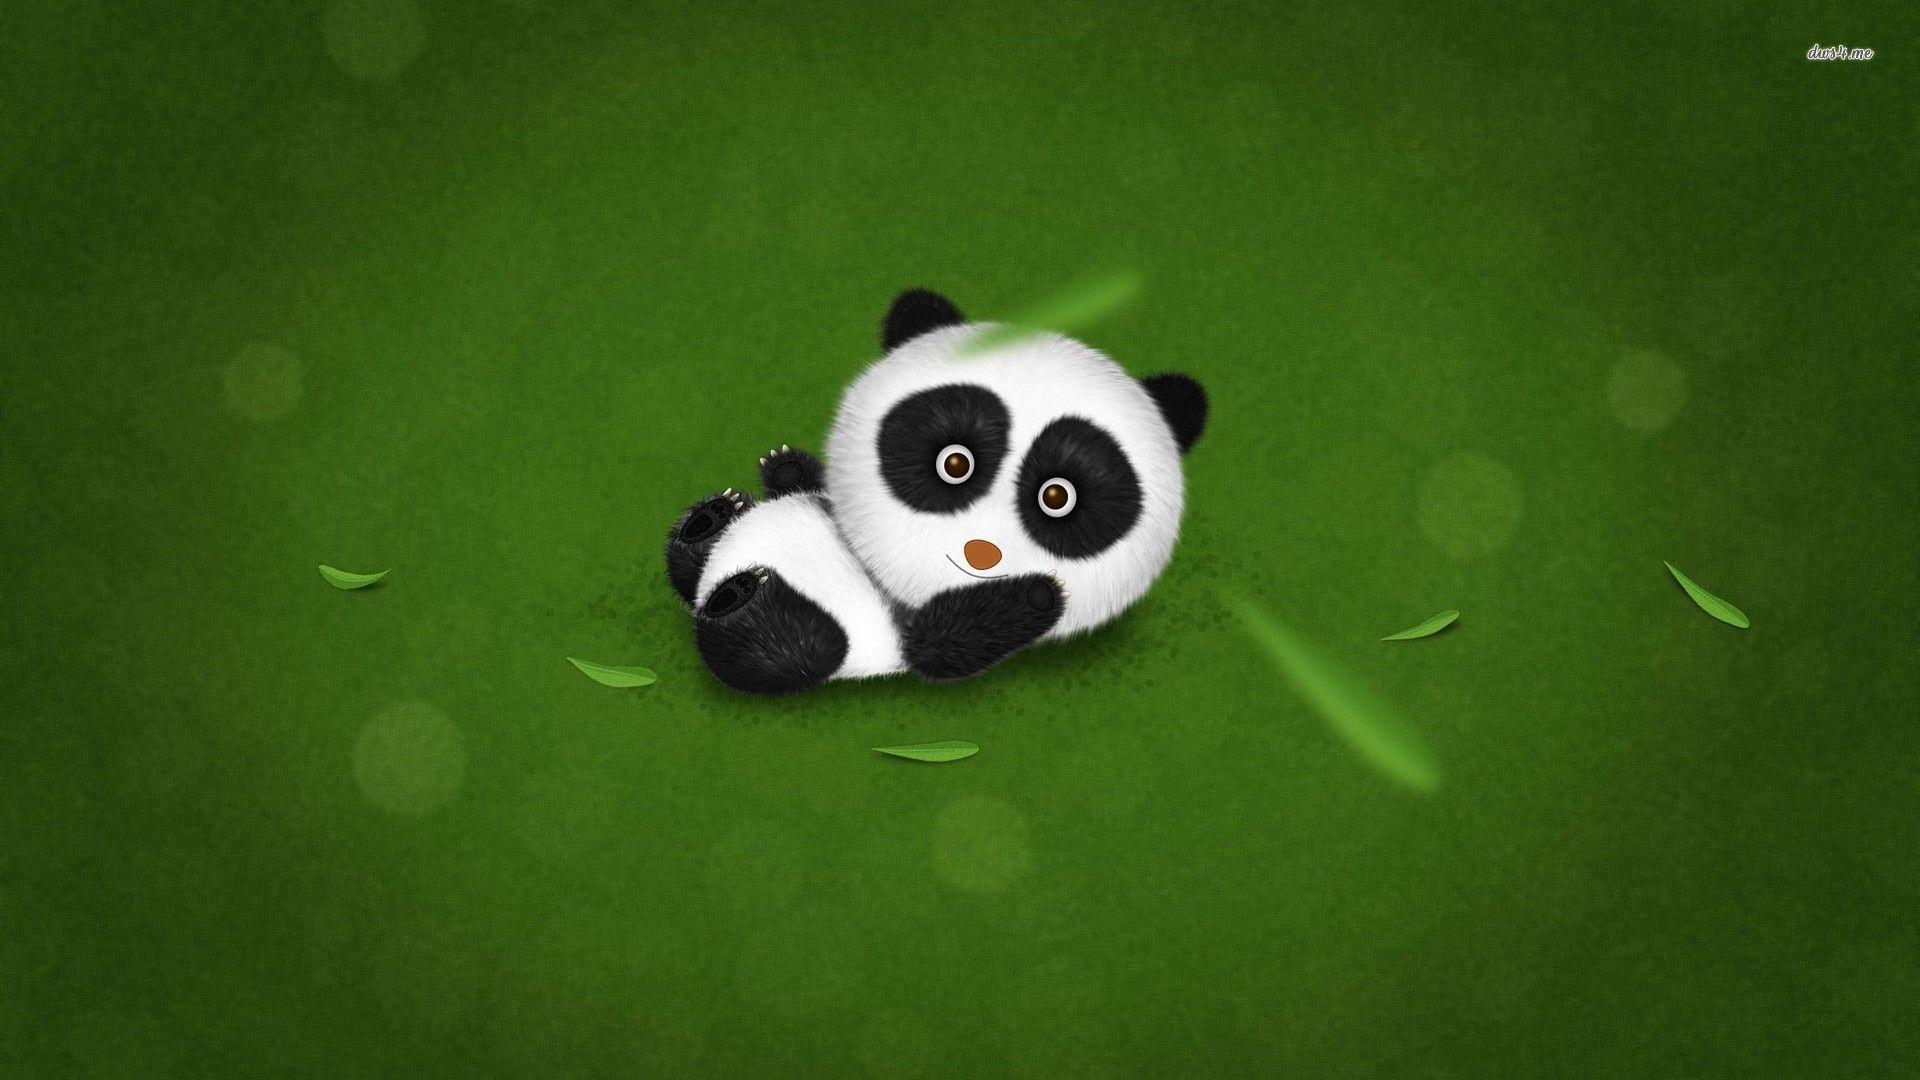 Cute Panda Cartoon Wallpaper Hd Images amp Pictures   Becuo